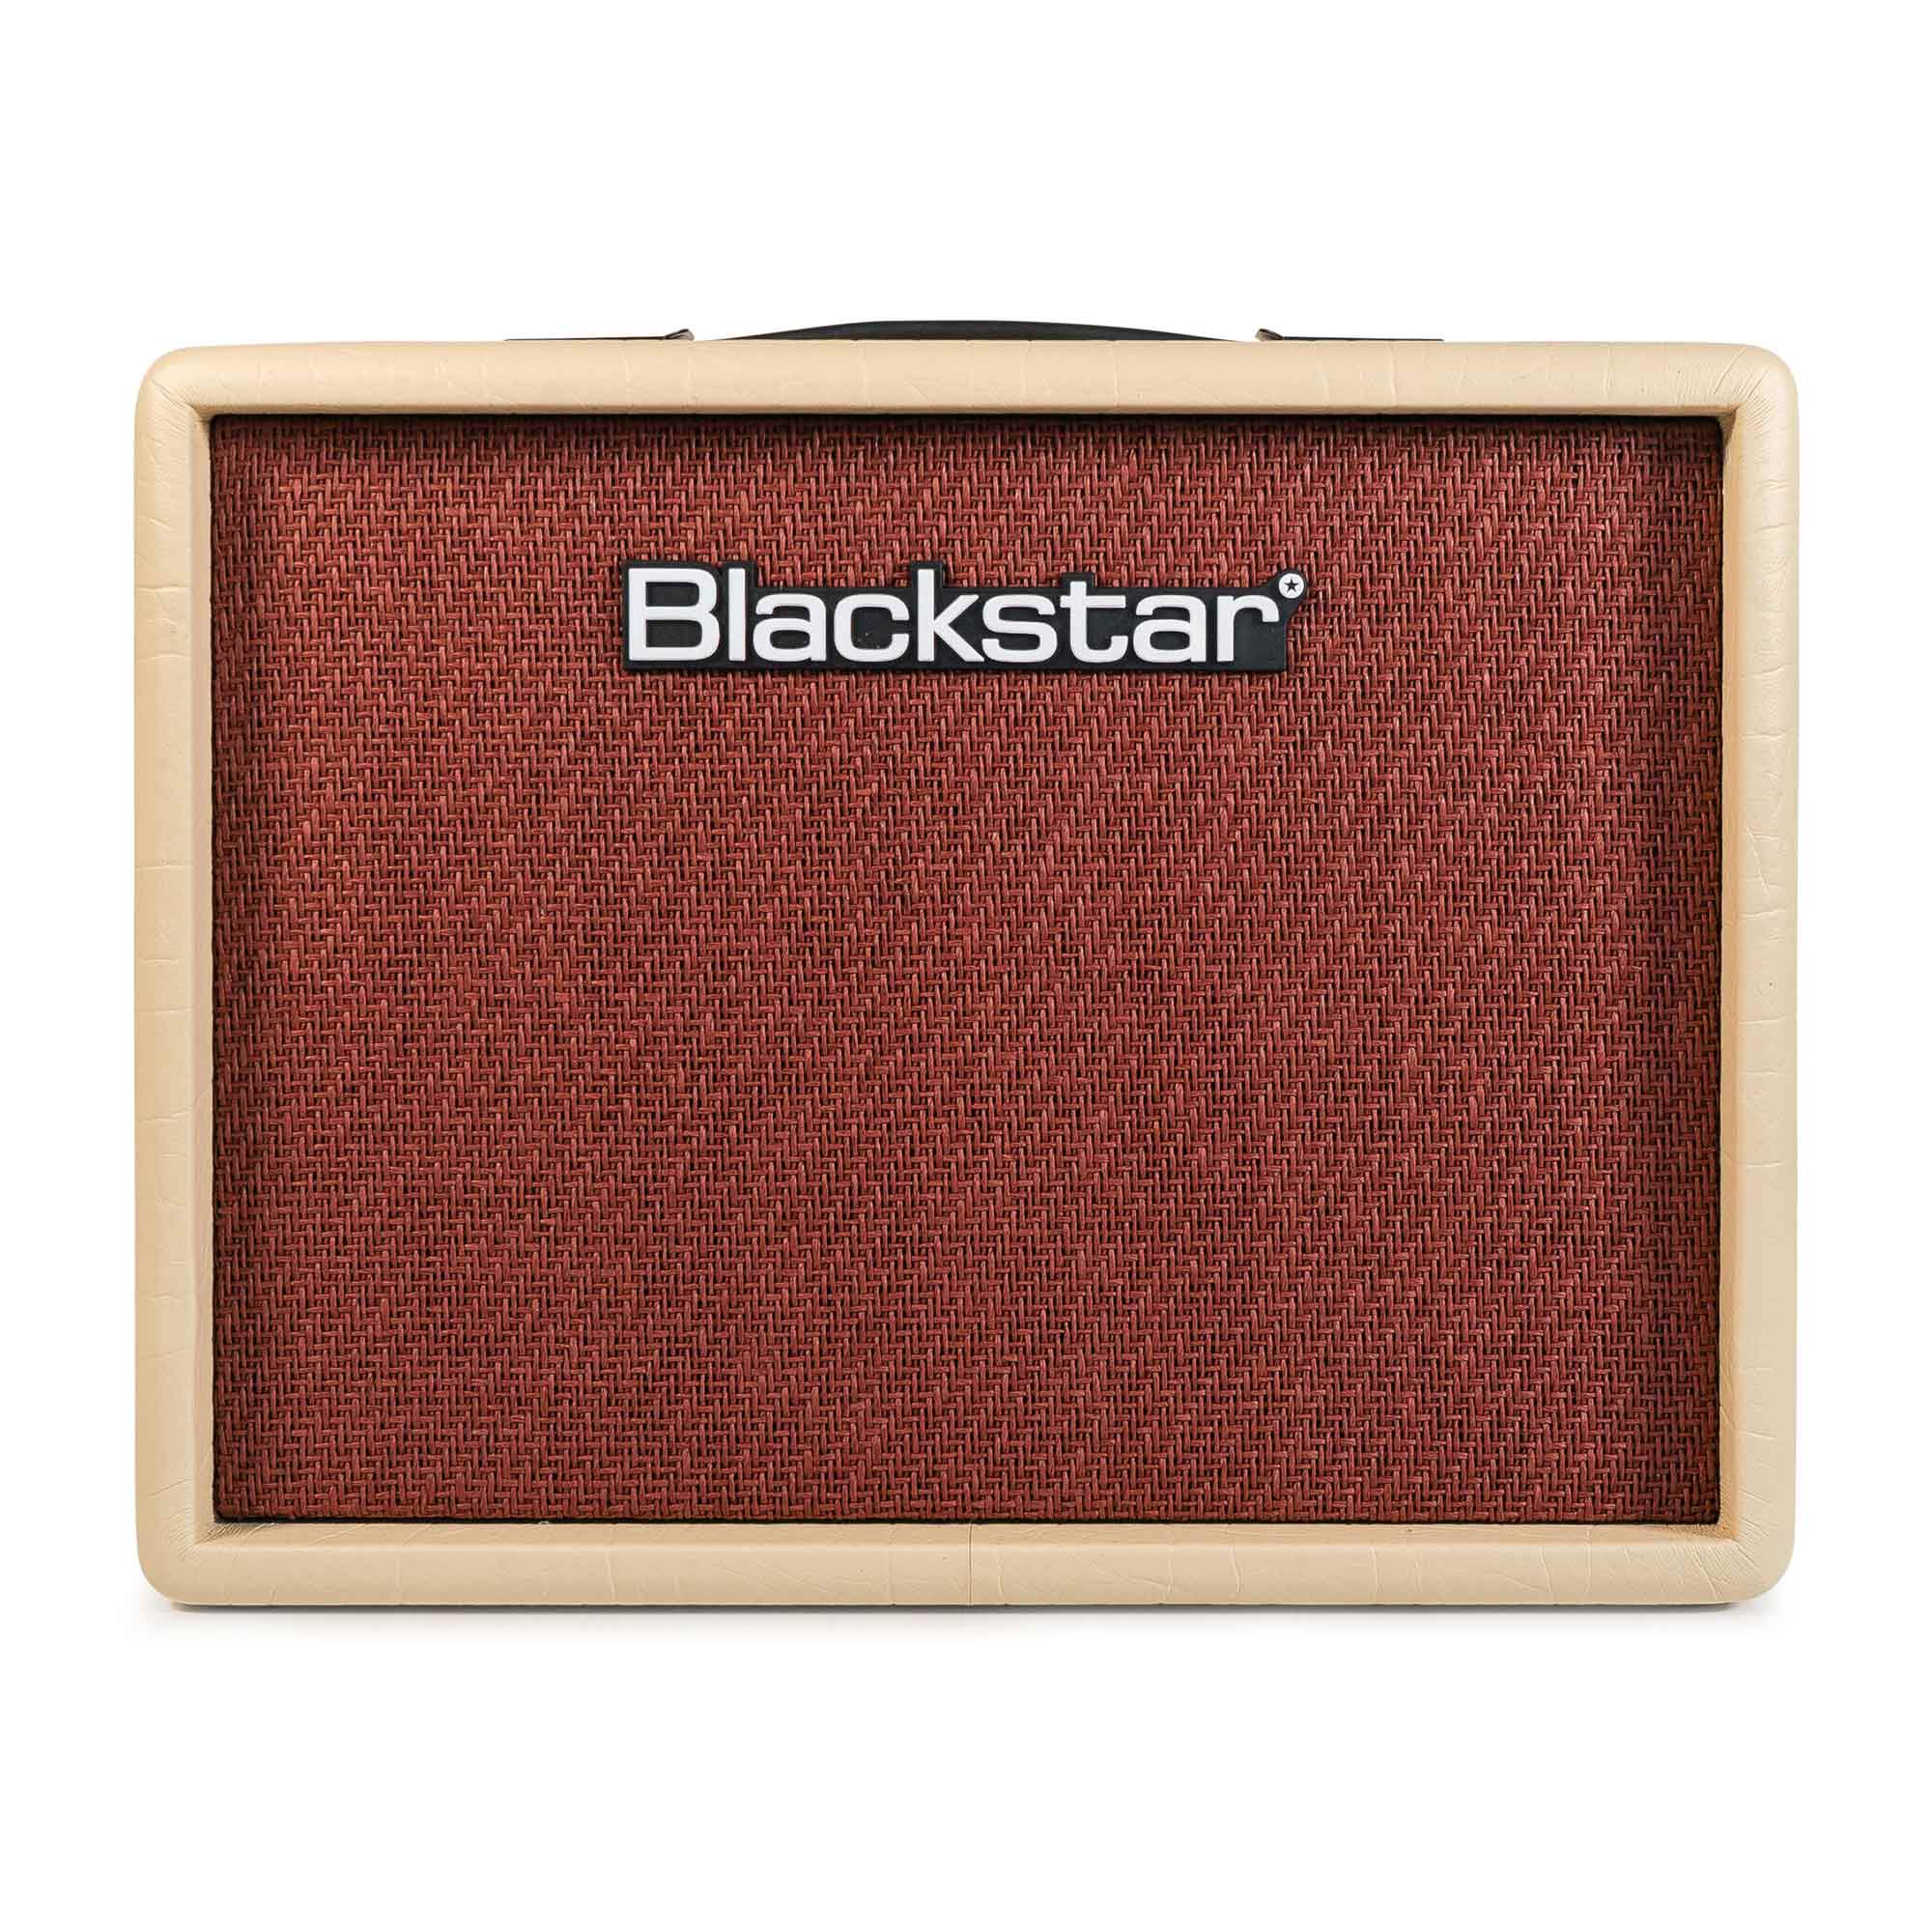 Blackstar Debut 15e 15w 2x3 Cream - Electric guitar combo amp - Variation 1